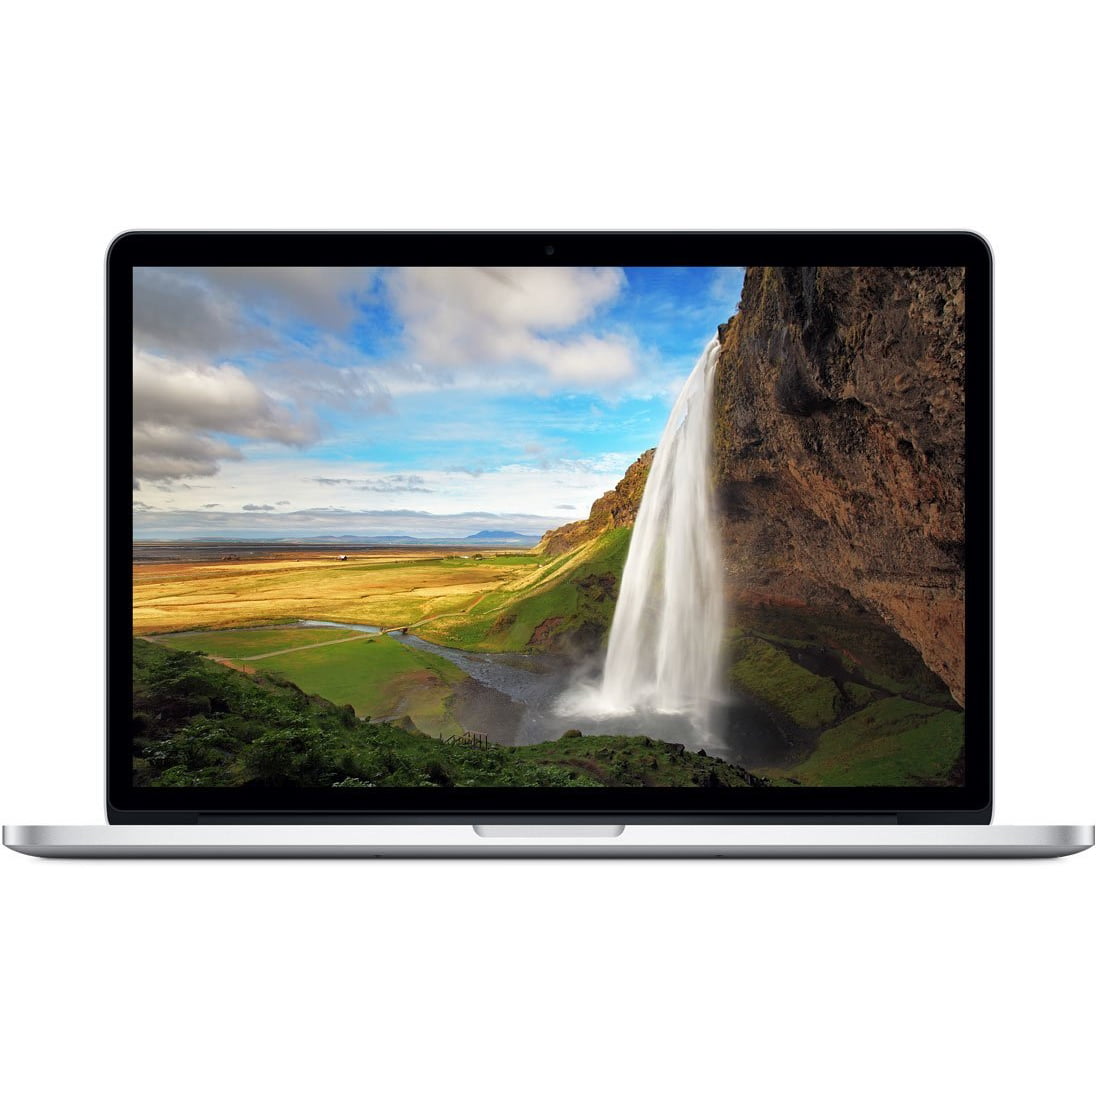 Apple Macbook Pro MJLT2LL/A 15-inch Laptop (2.5 GHz Intel Core i7  Processor, 16GB RAM, 512 GB Hard Drive, Mac OS X) (Non-Retail Packaging)